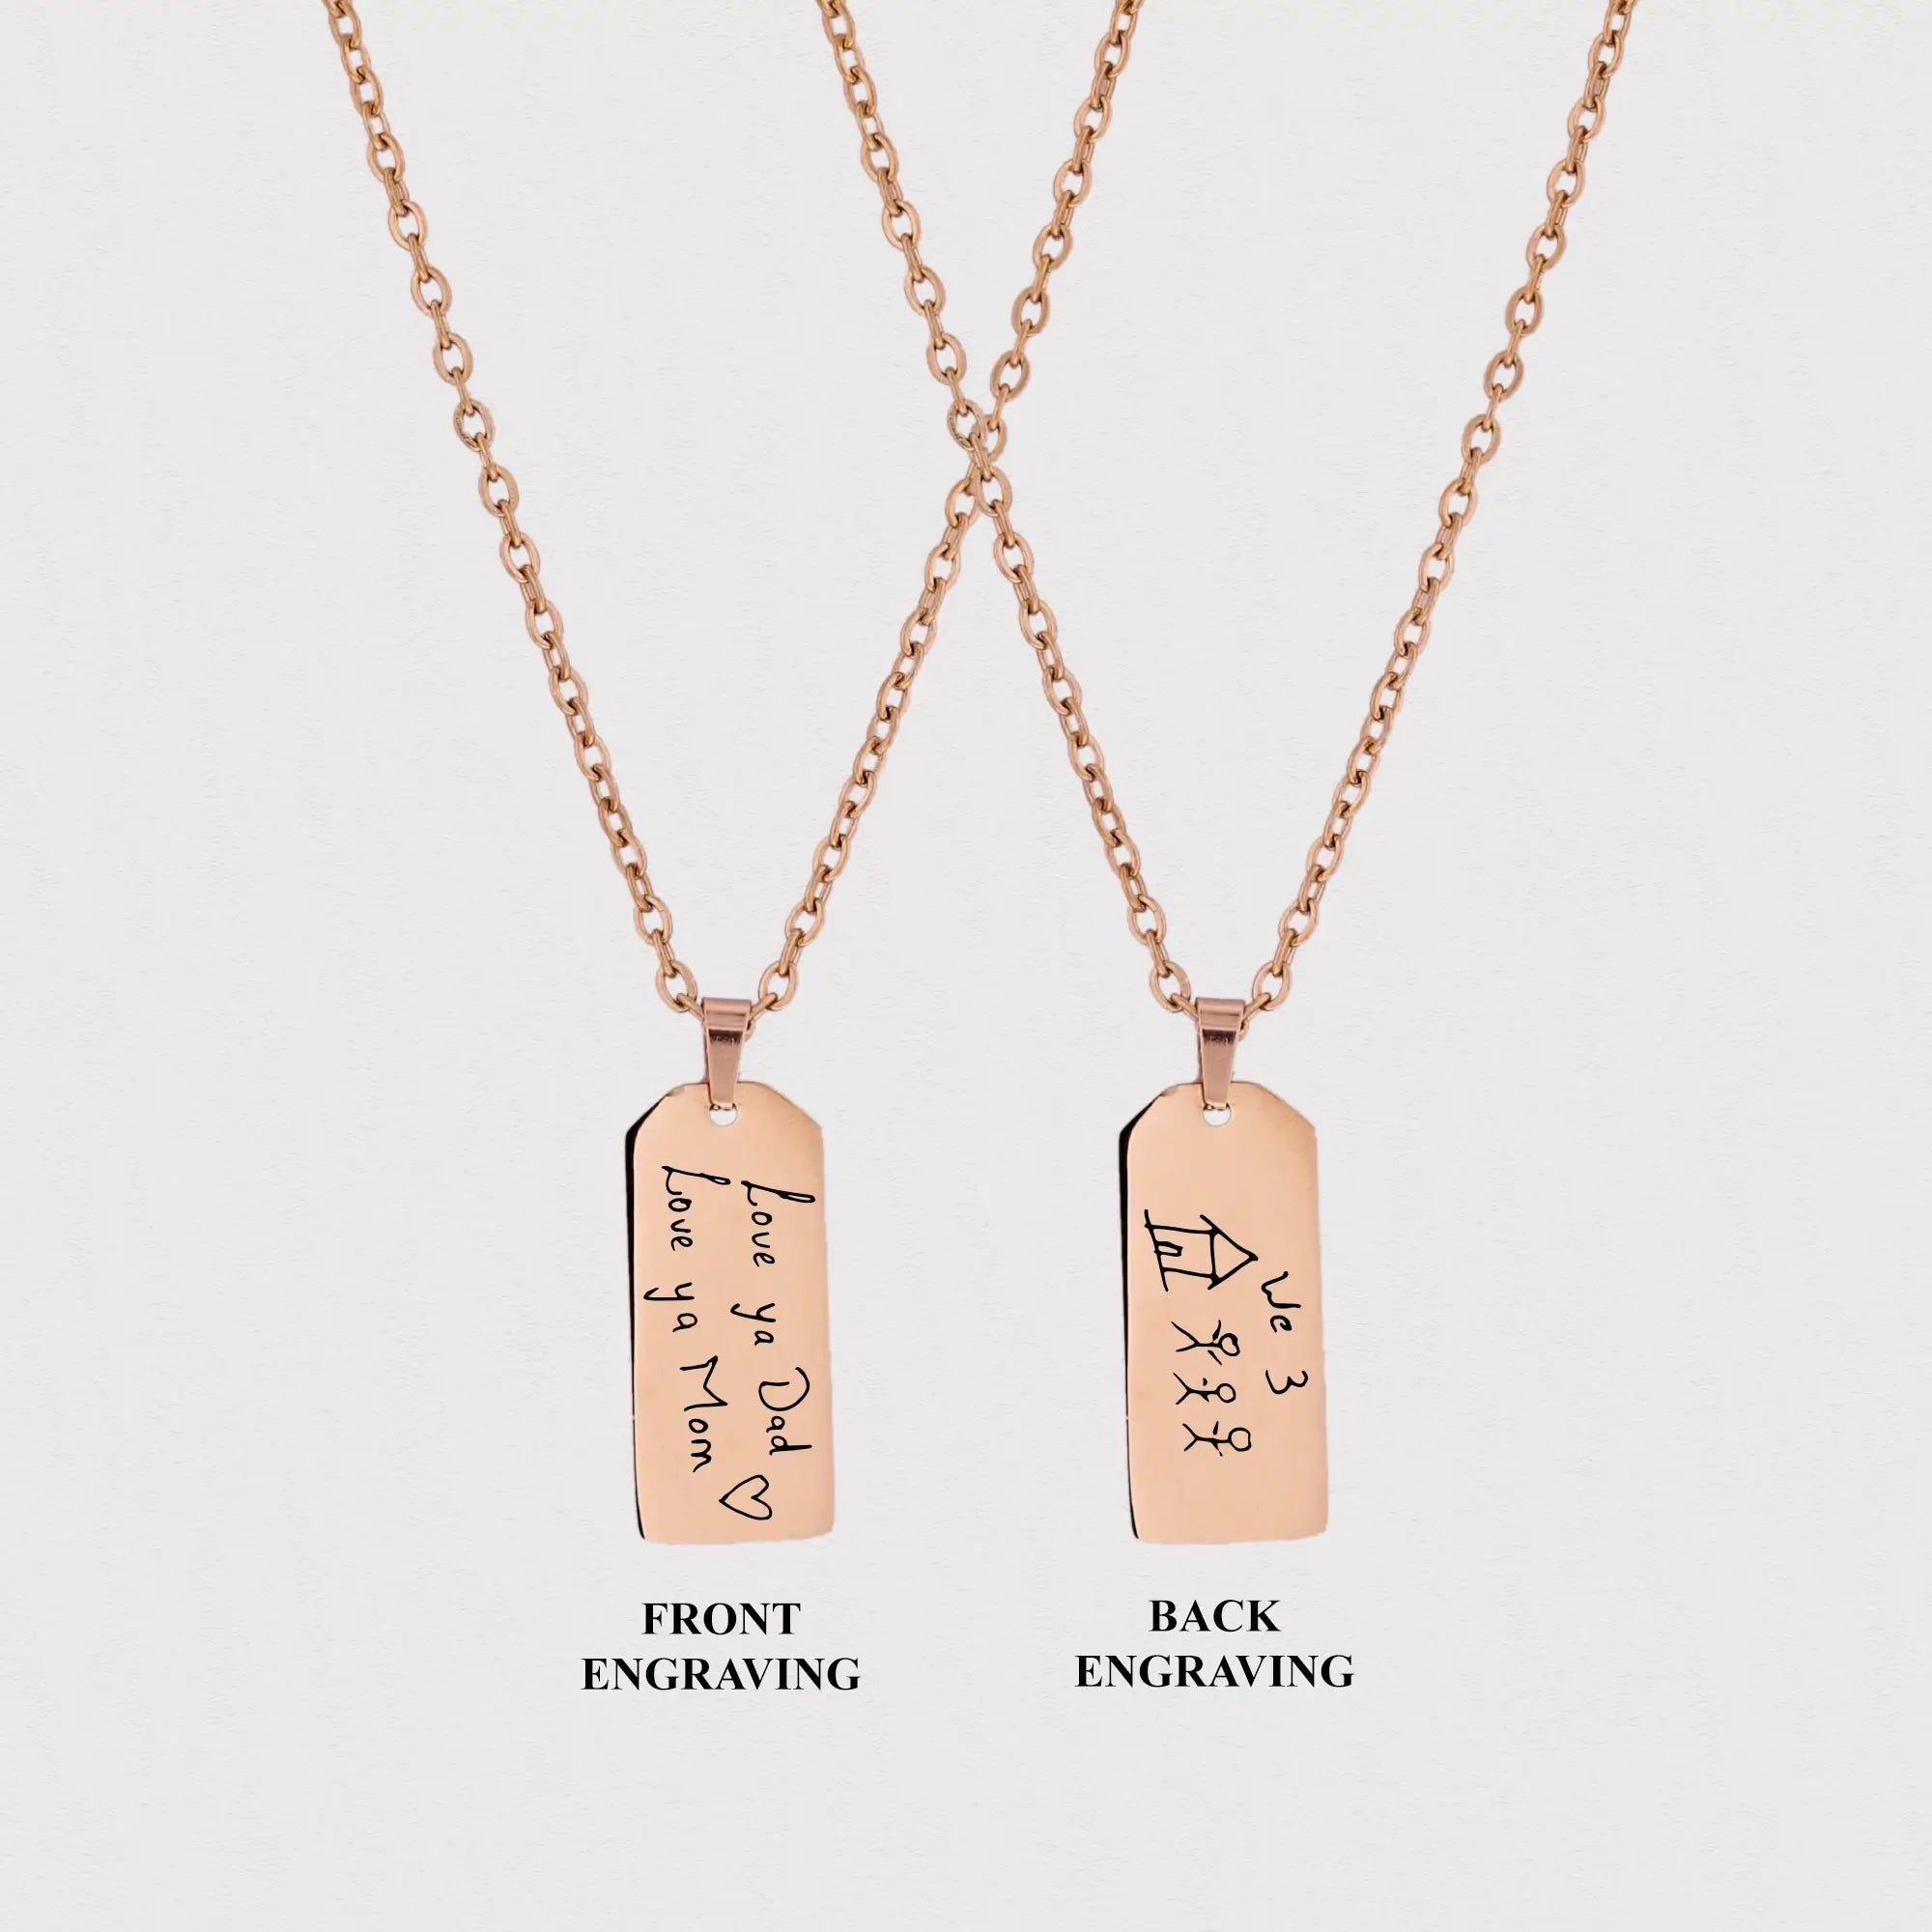 Minimalist Personalized Name Necklace, necklace aesthetic